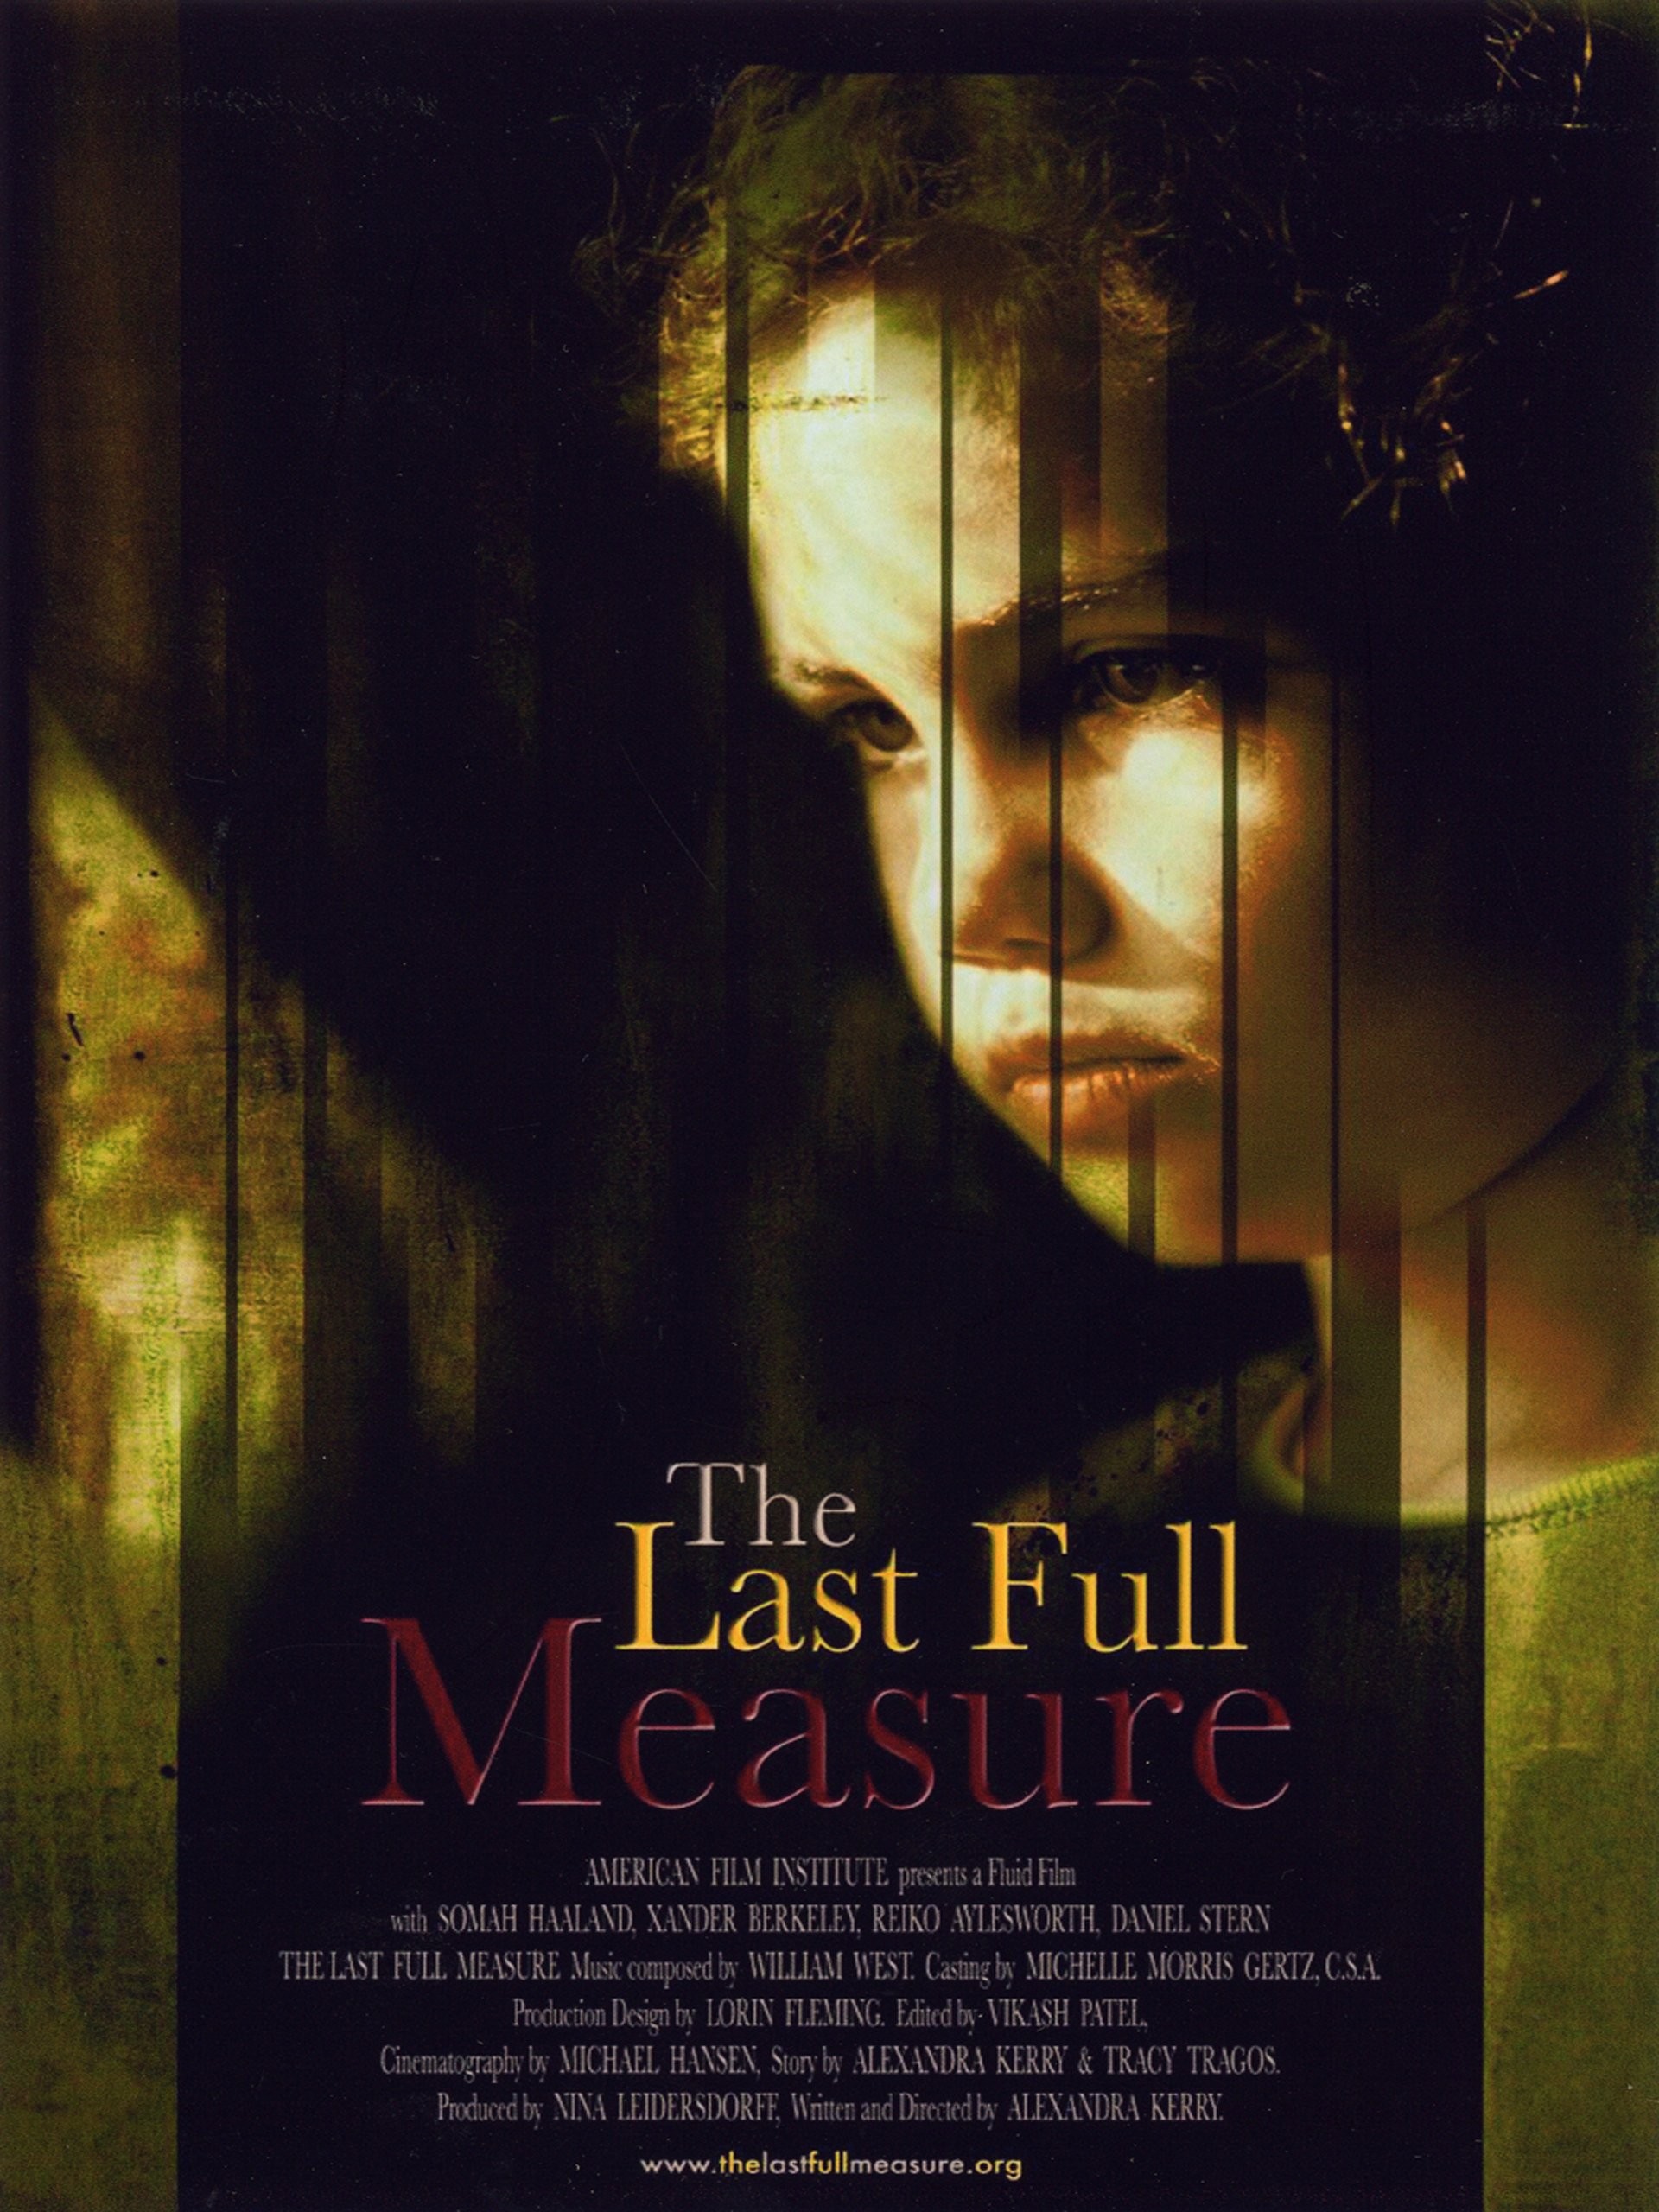 Mega Sized Movie Poster Image for The Last Full Measure